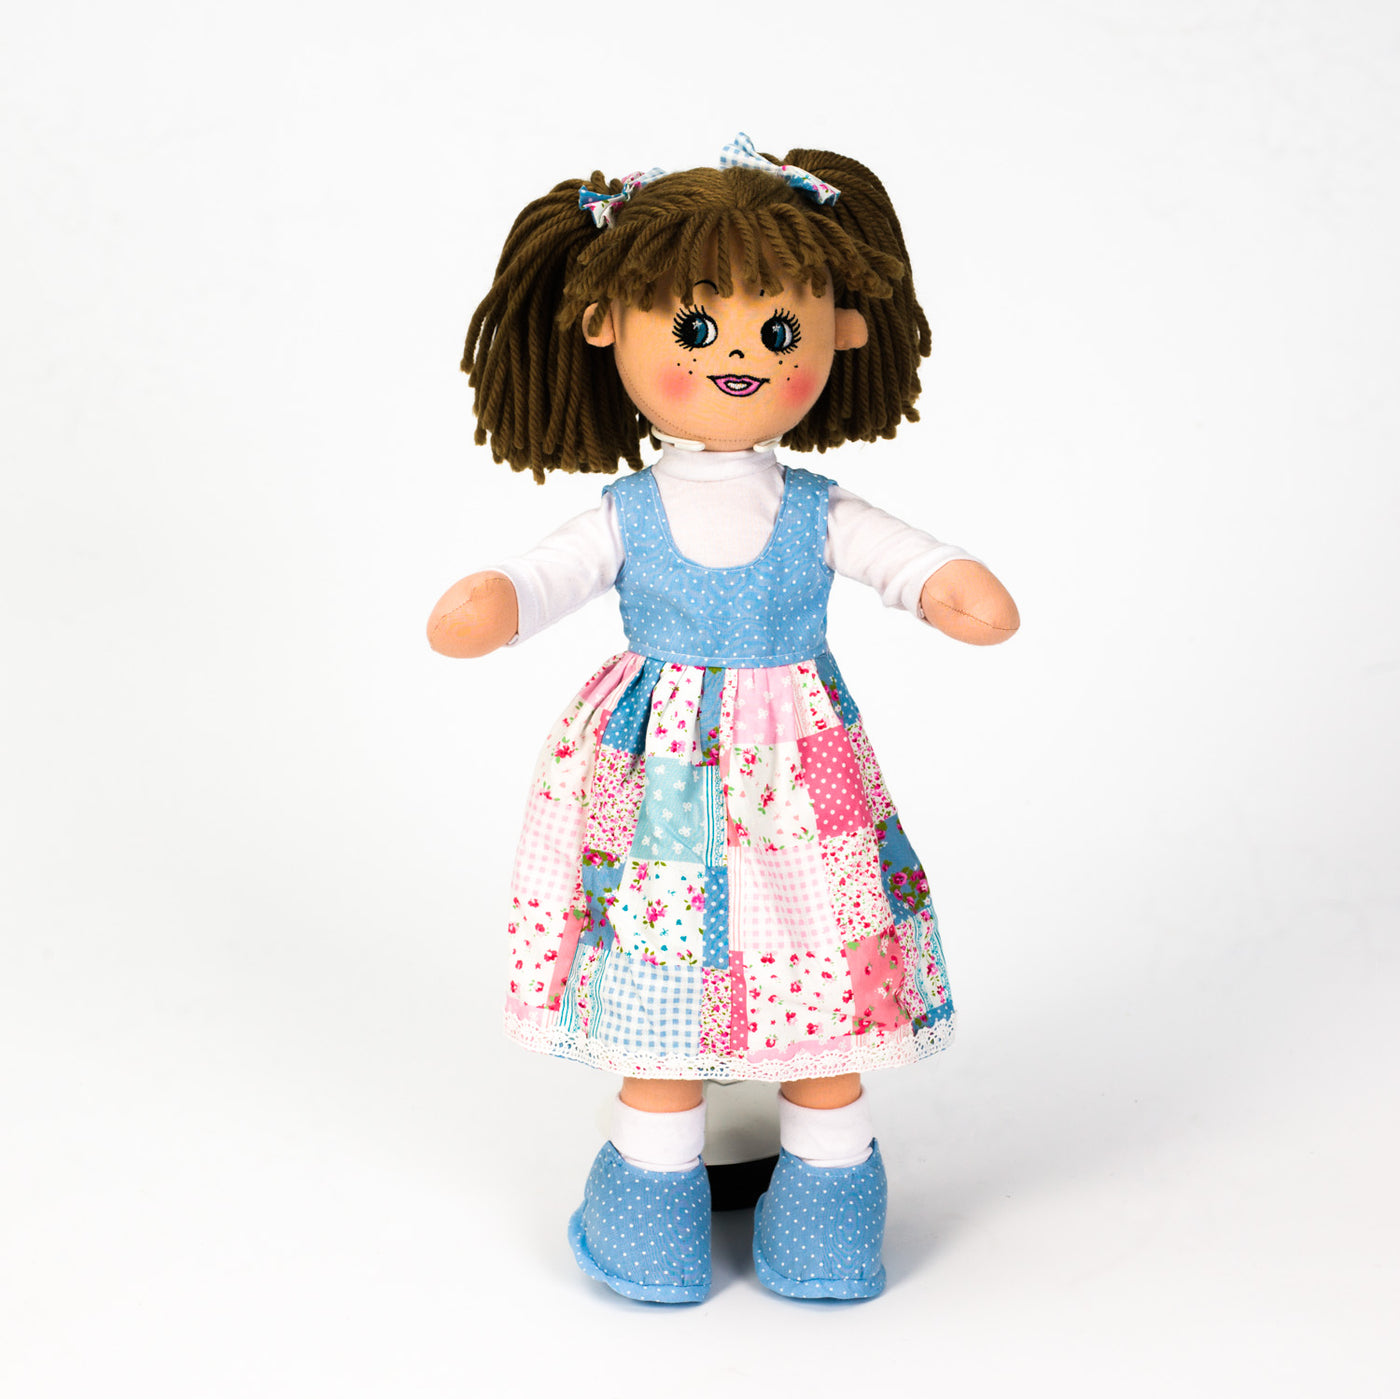 Personalised Rag Doll - Ella Rose